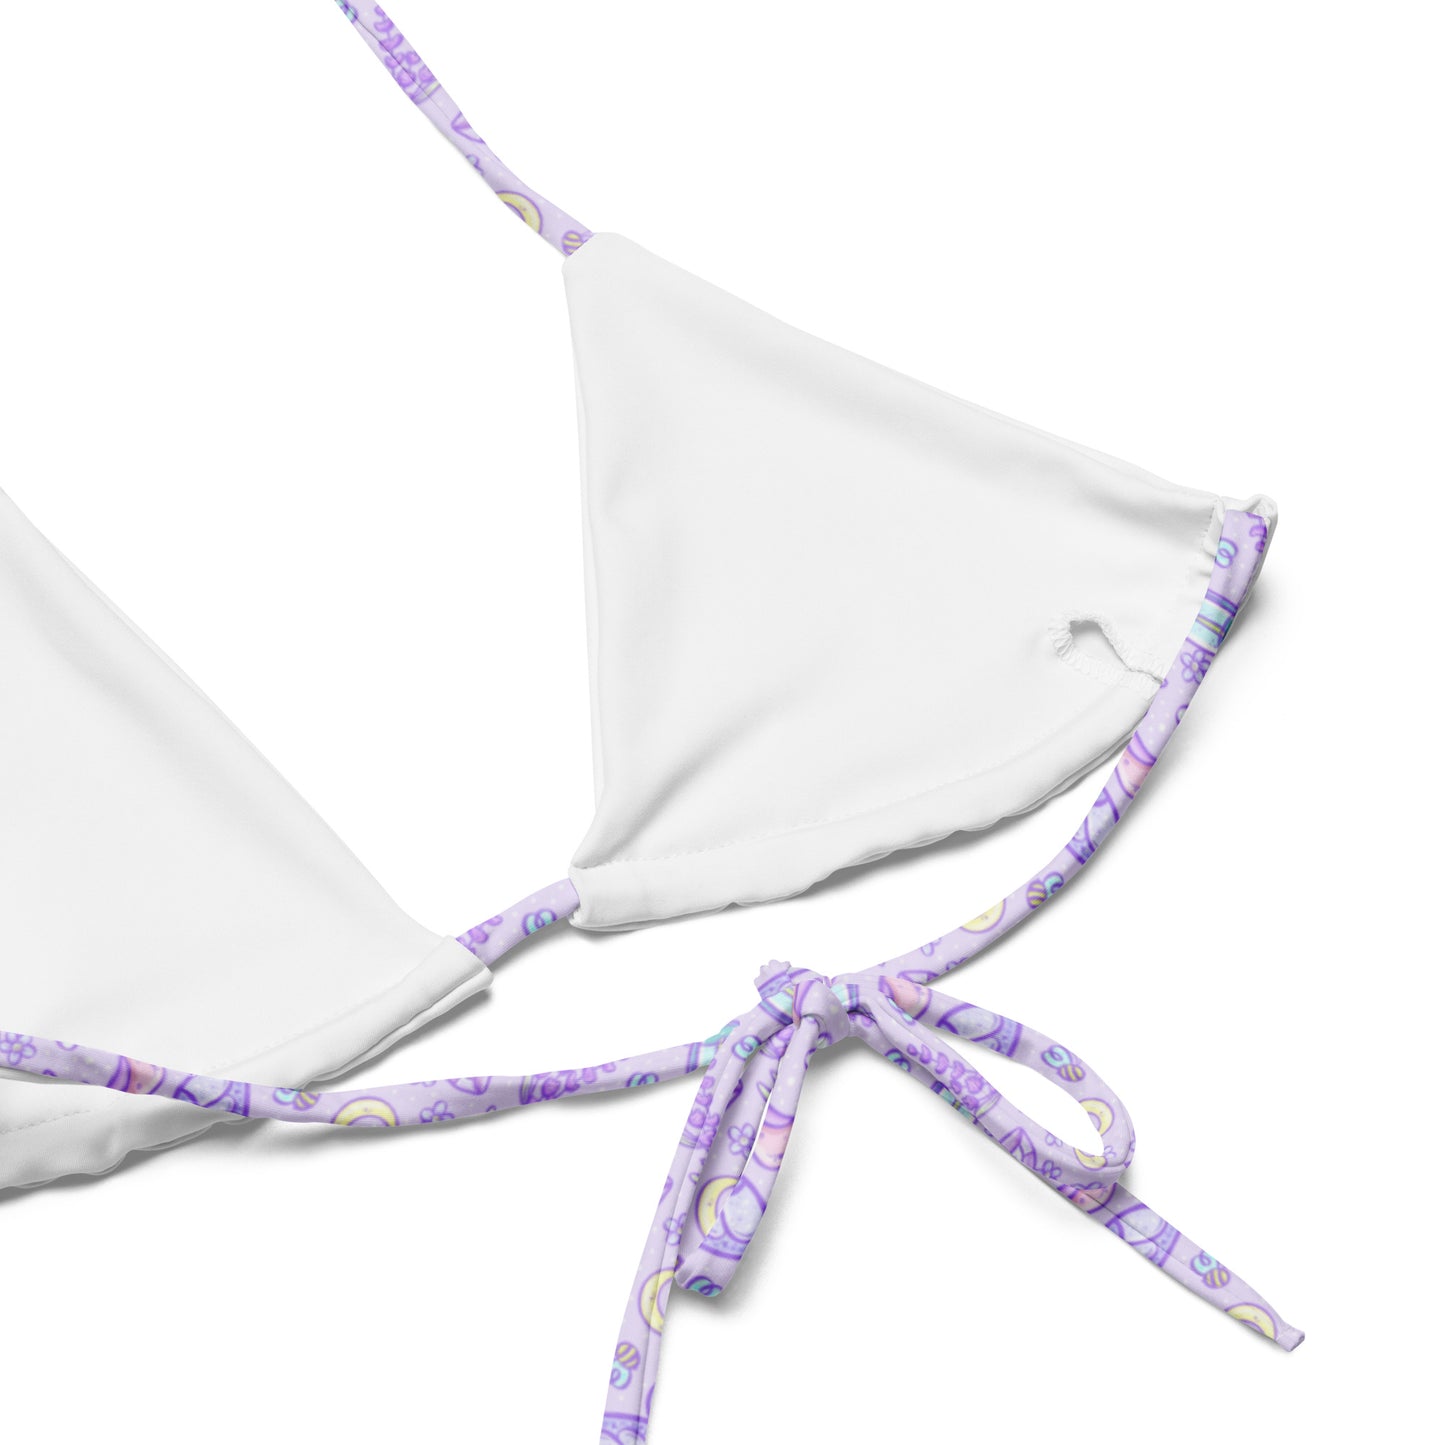 Lavender Cow string bikini top, plus size available